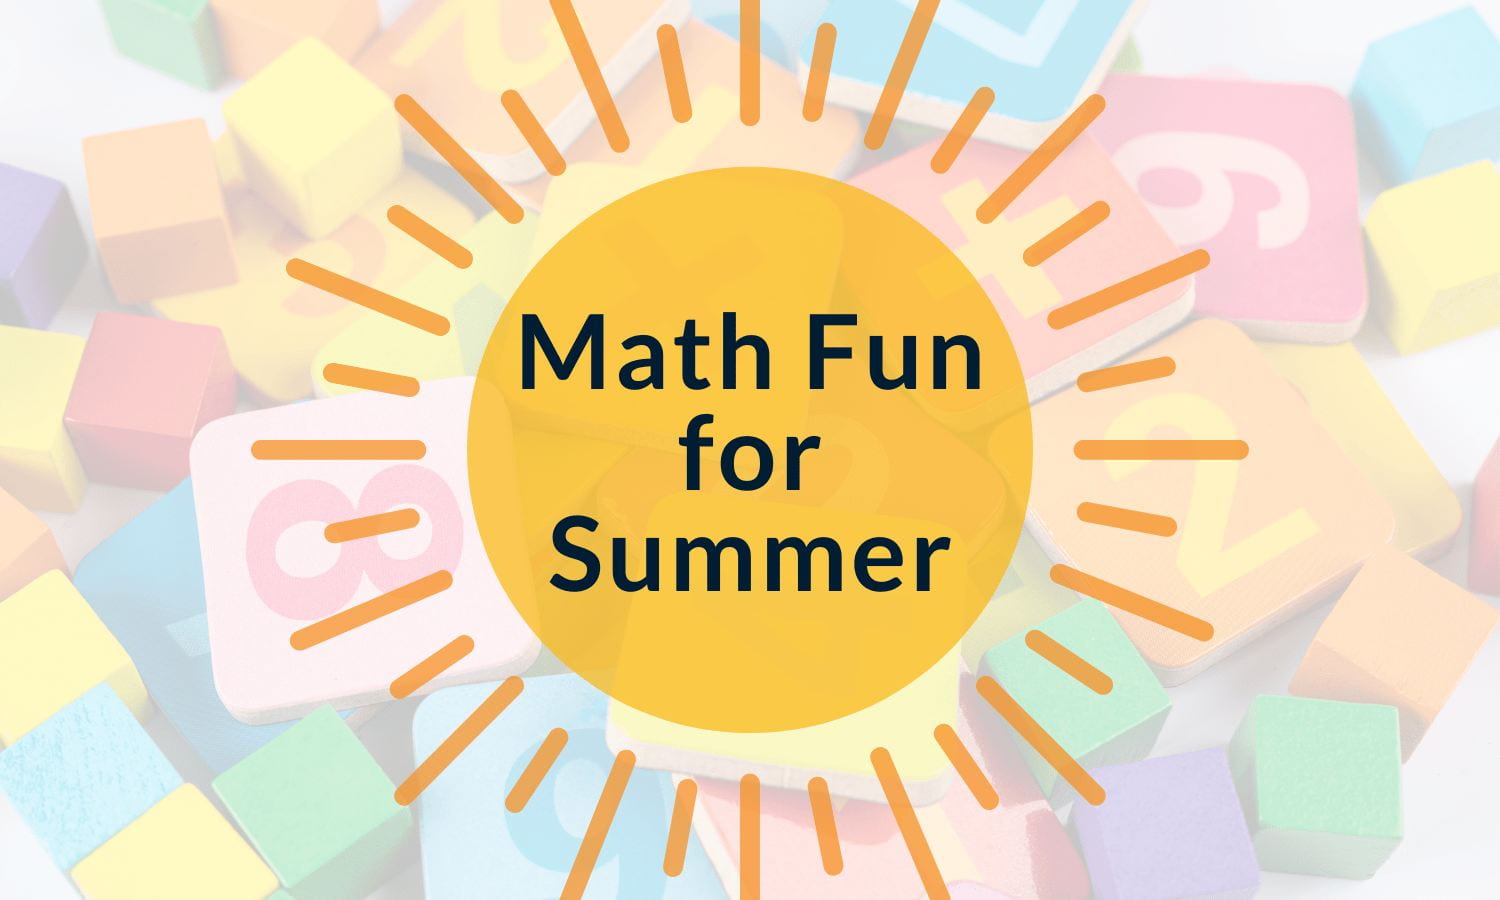 Math Fun for Summer!